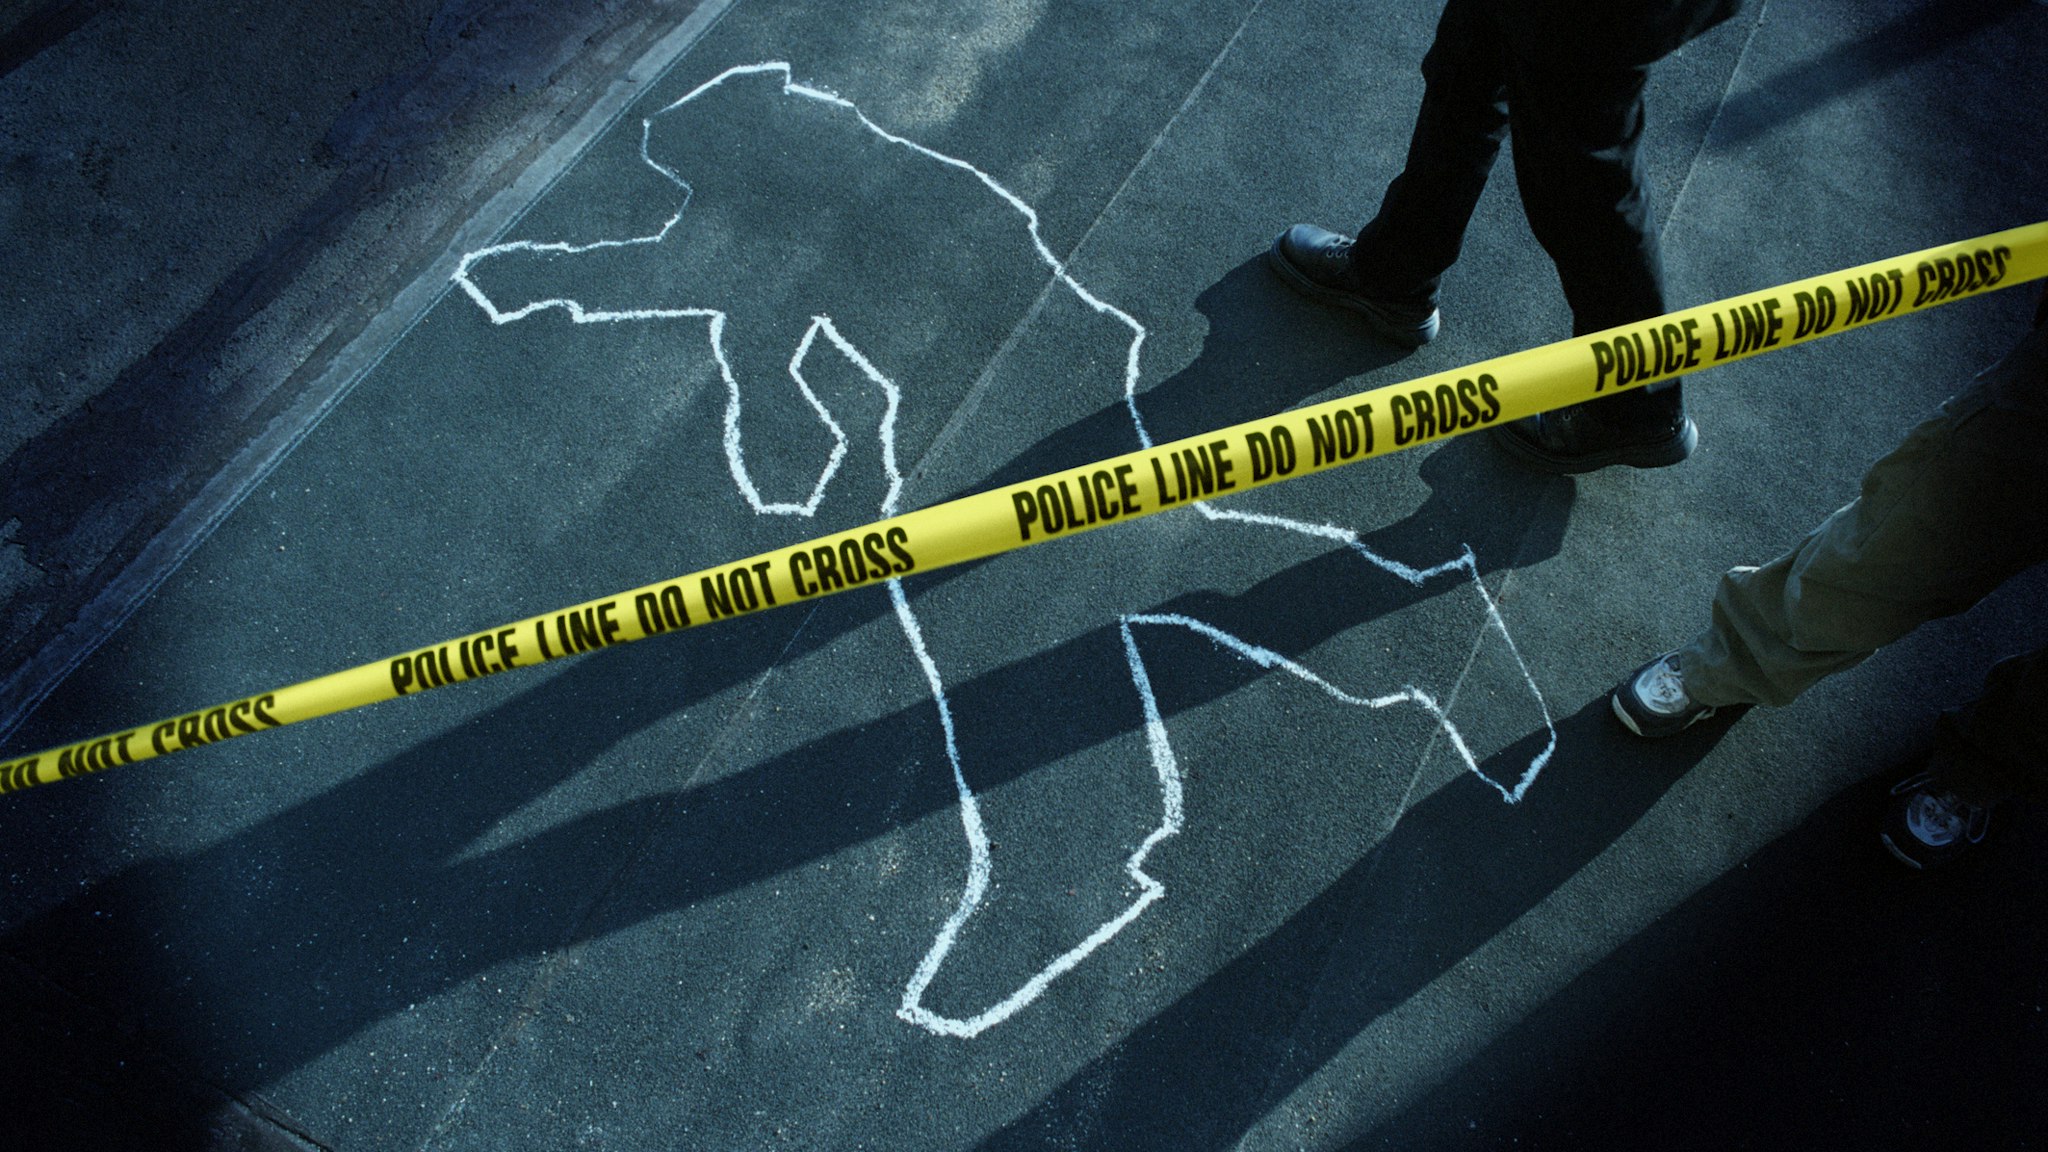 Chalk Outline at Police Crime Scene